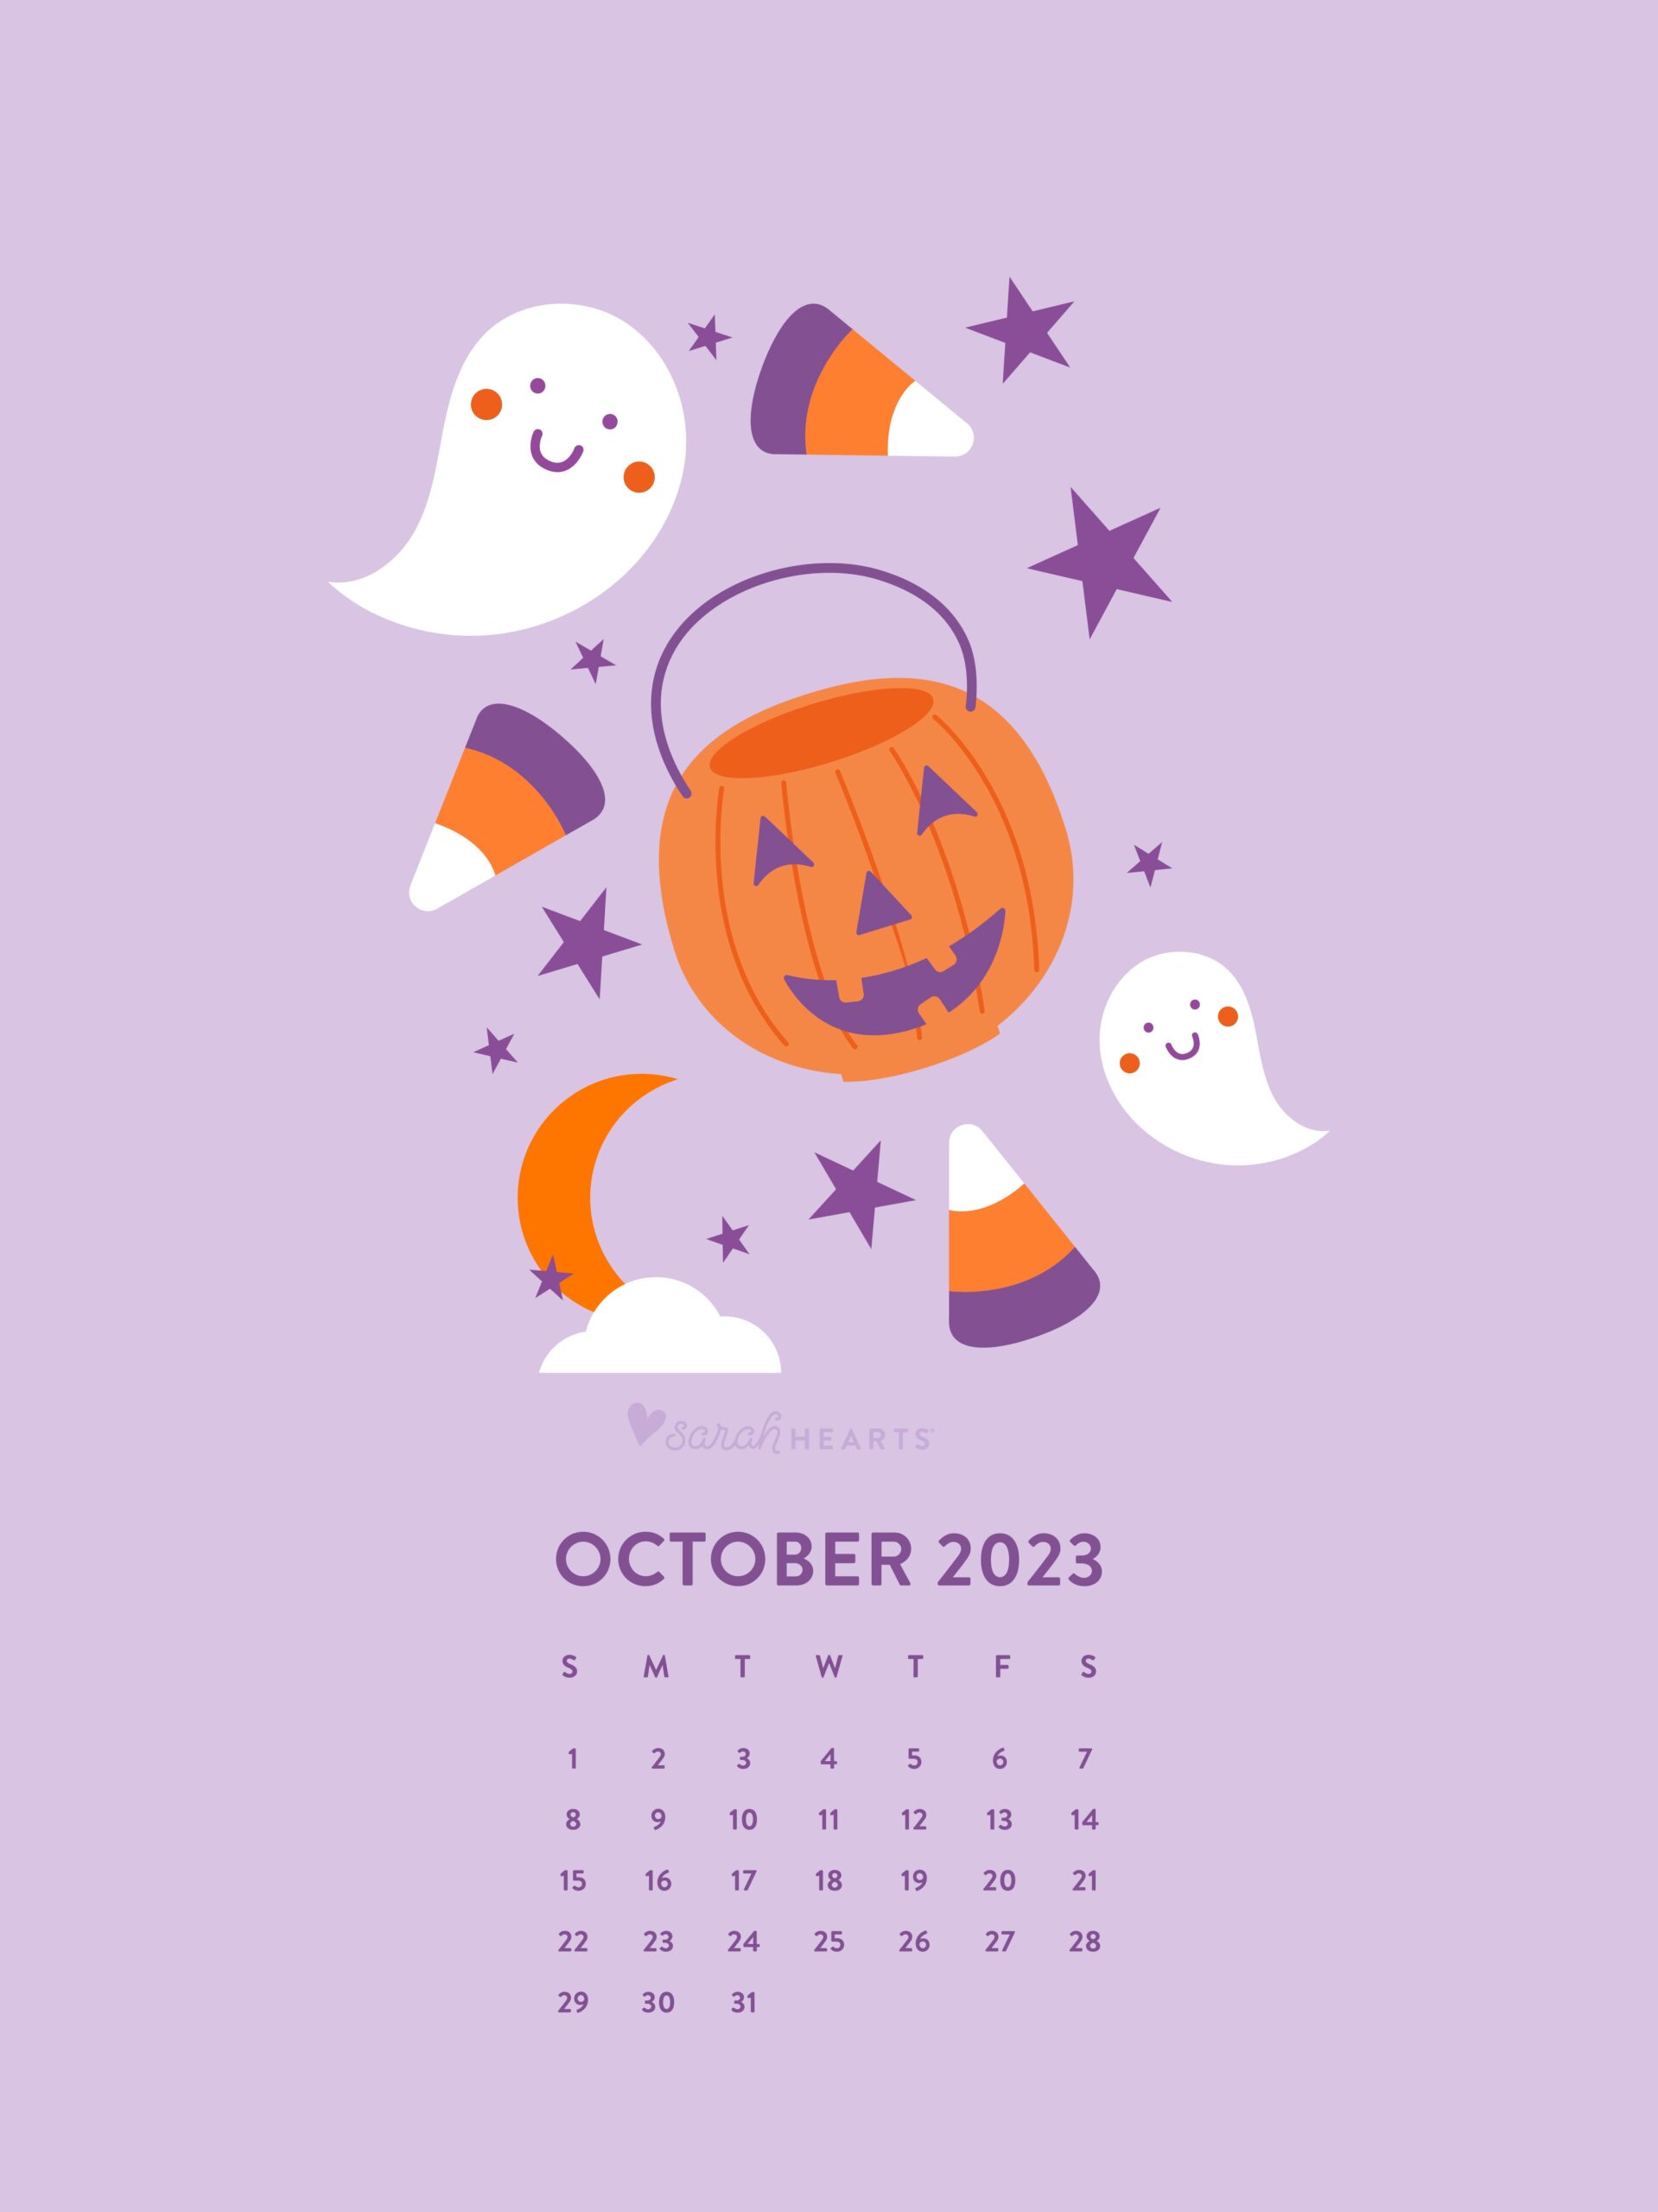 October 2023 Halloween Calendar Wallpaper - Sarah Hearts